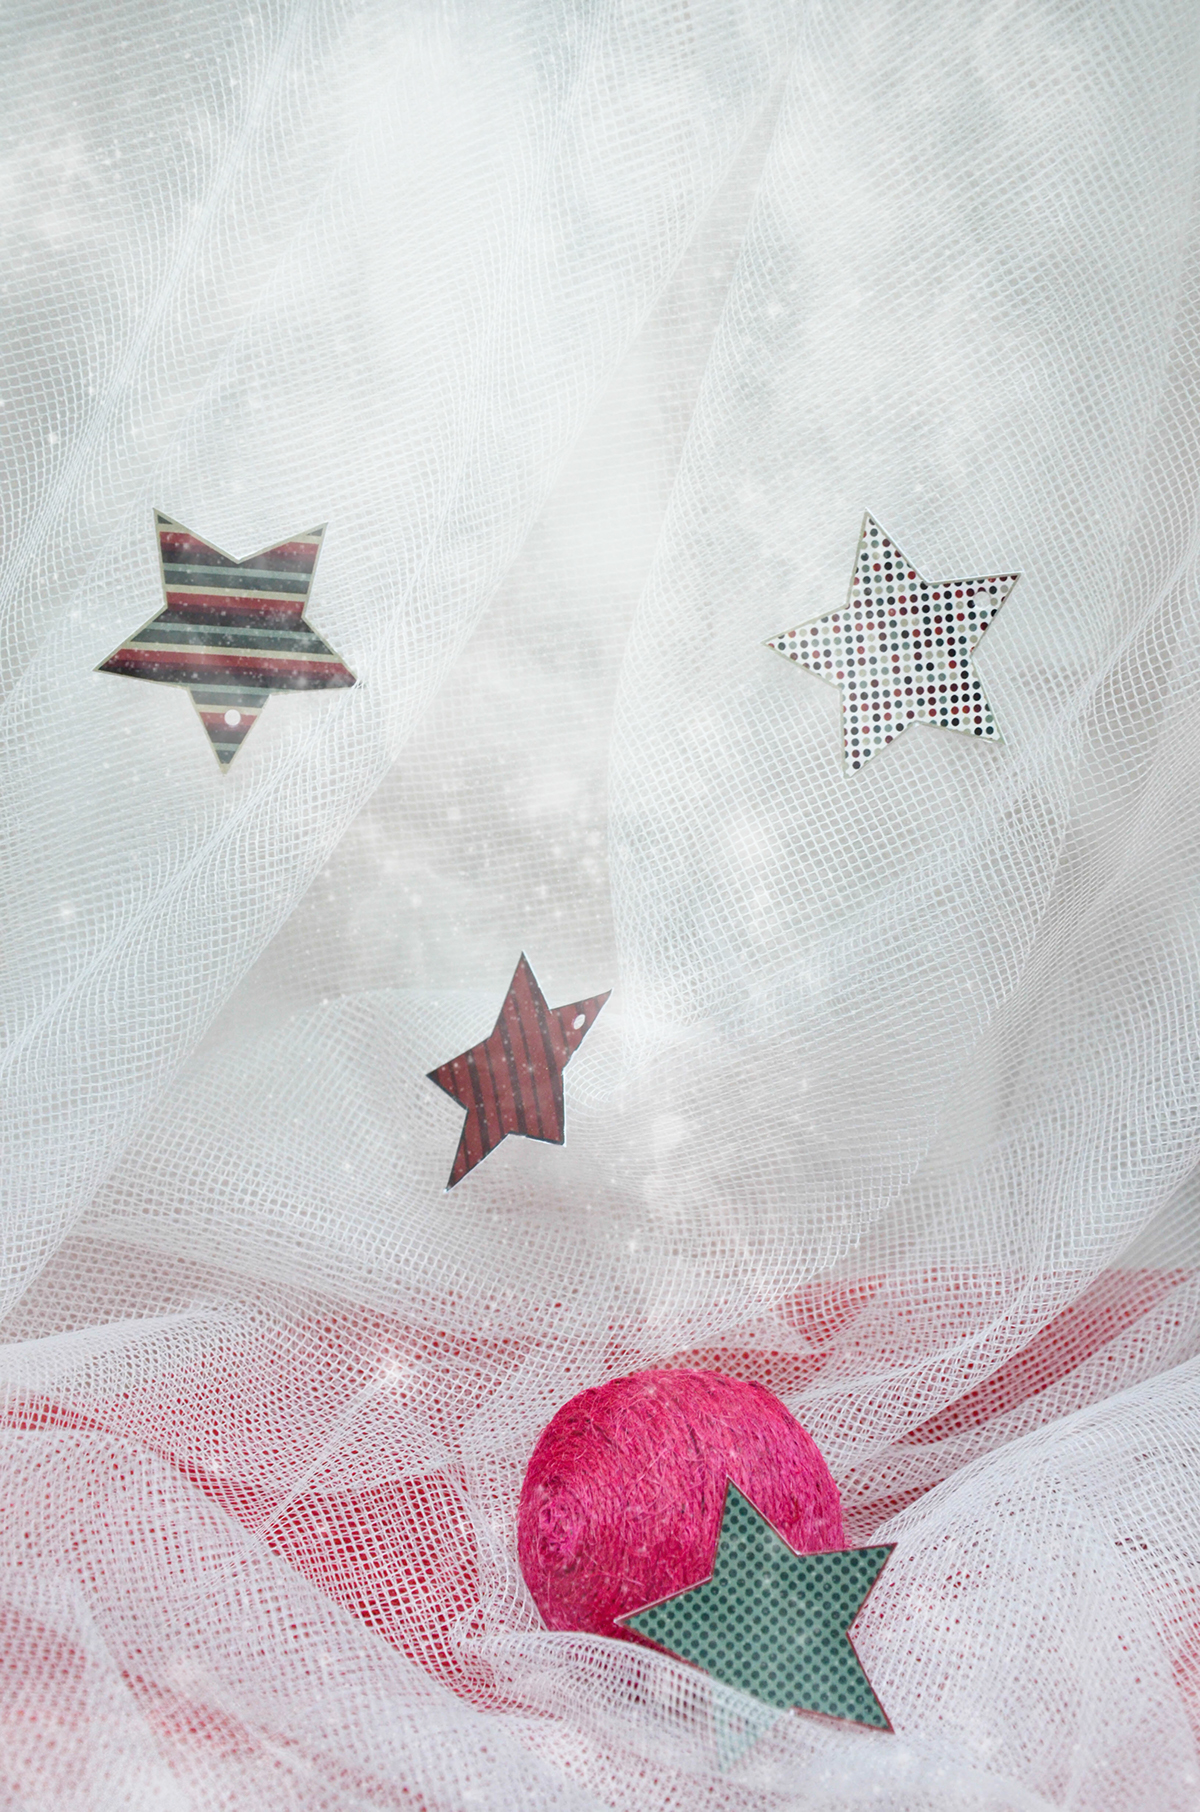 Christmas set noel cards rudolf Presents snow balls stars santa claus reindeer Illustrator graphic paint